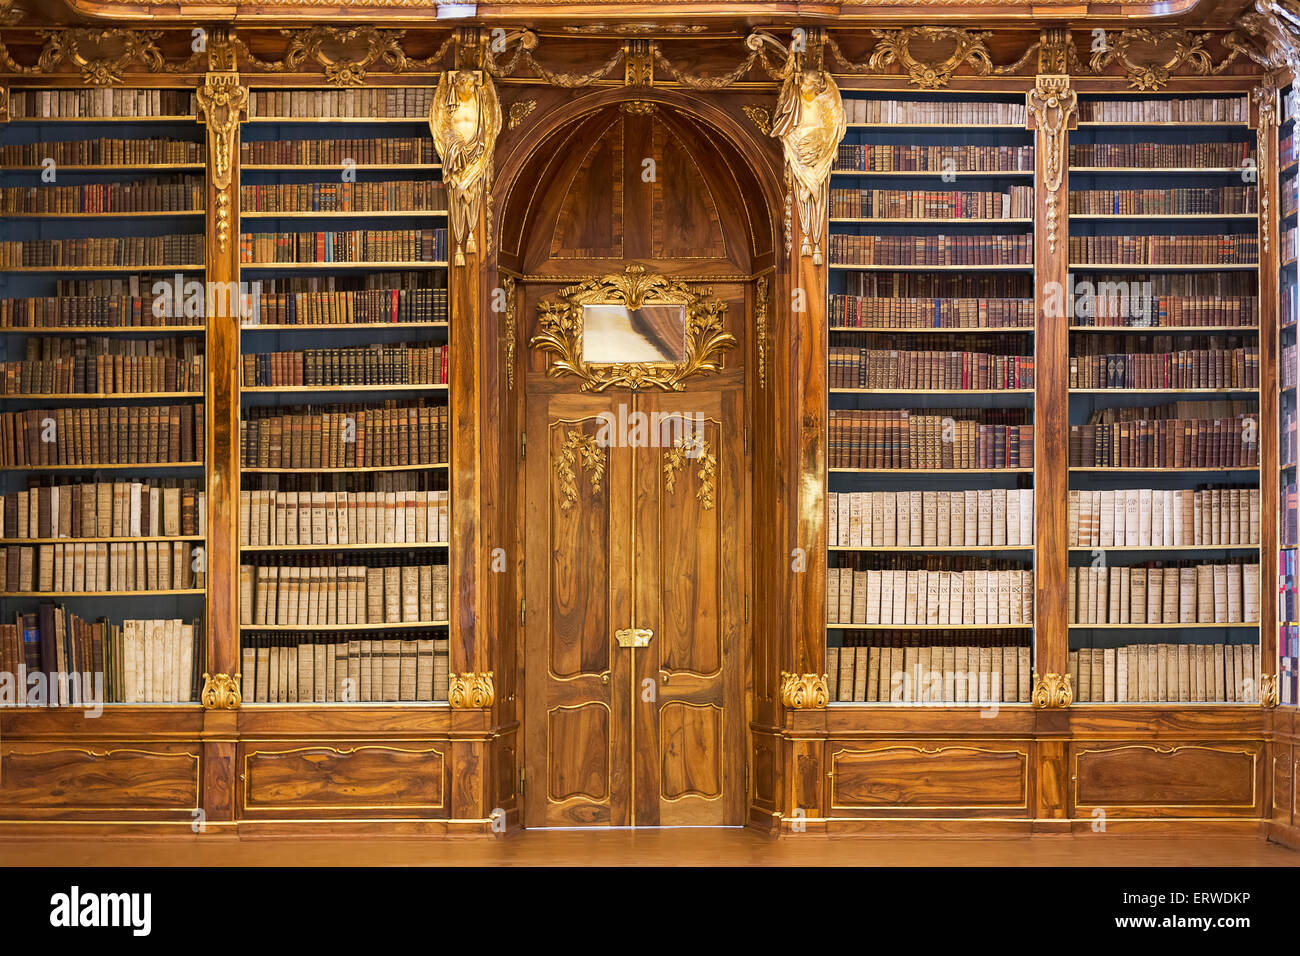 PRAGUE, CZECH REPUBLIC - JANUARY 04, 2015: Philosophical Hall of the Strahov Monastery Library Stock Photo